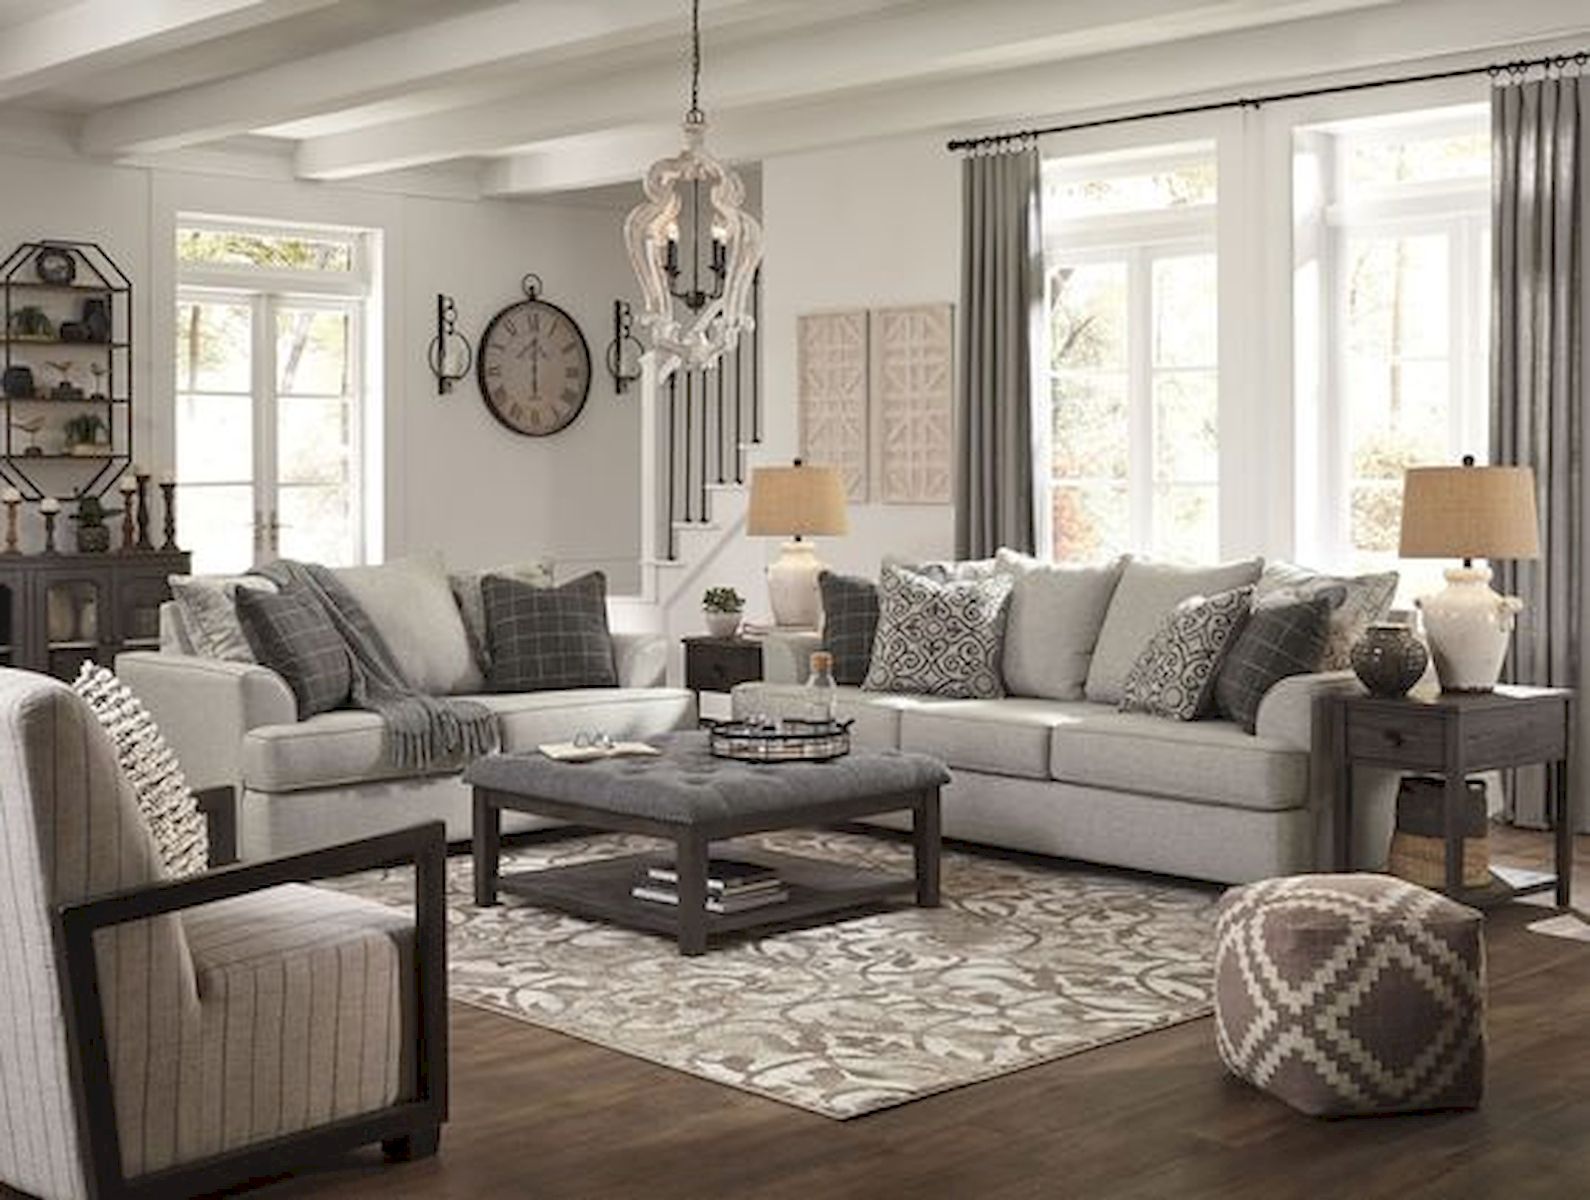 50 Gorgeous Living Room Decor and Design Ideas (11)